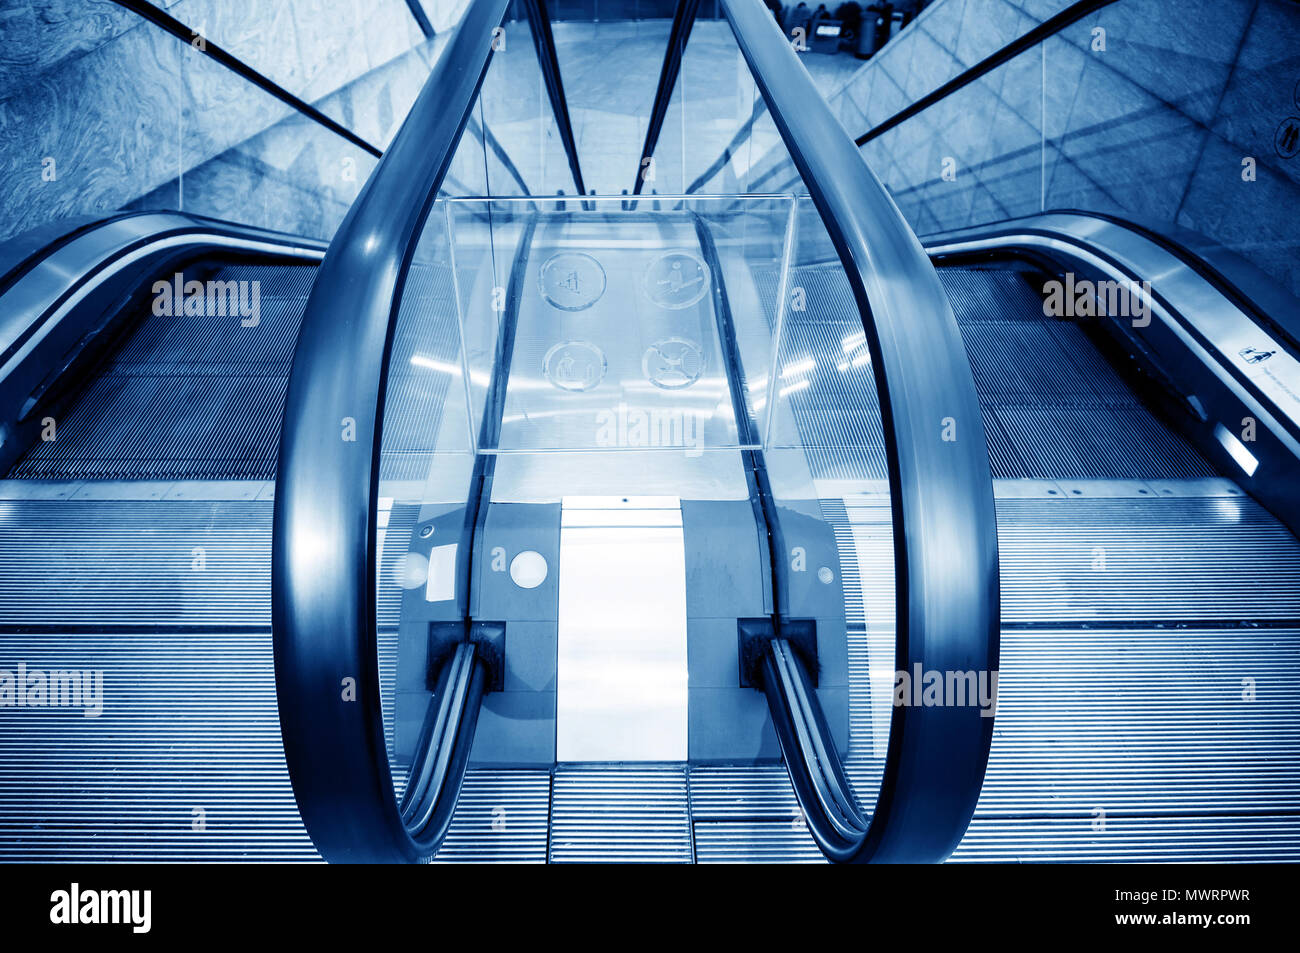 Blue escalator in airport hall, Shanghai, China. Stock Photo